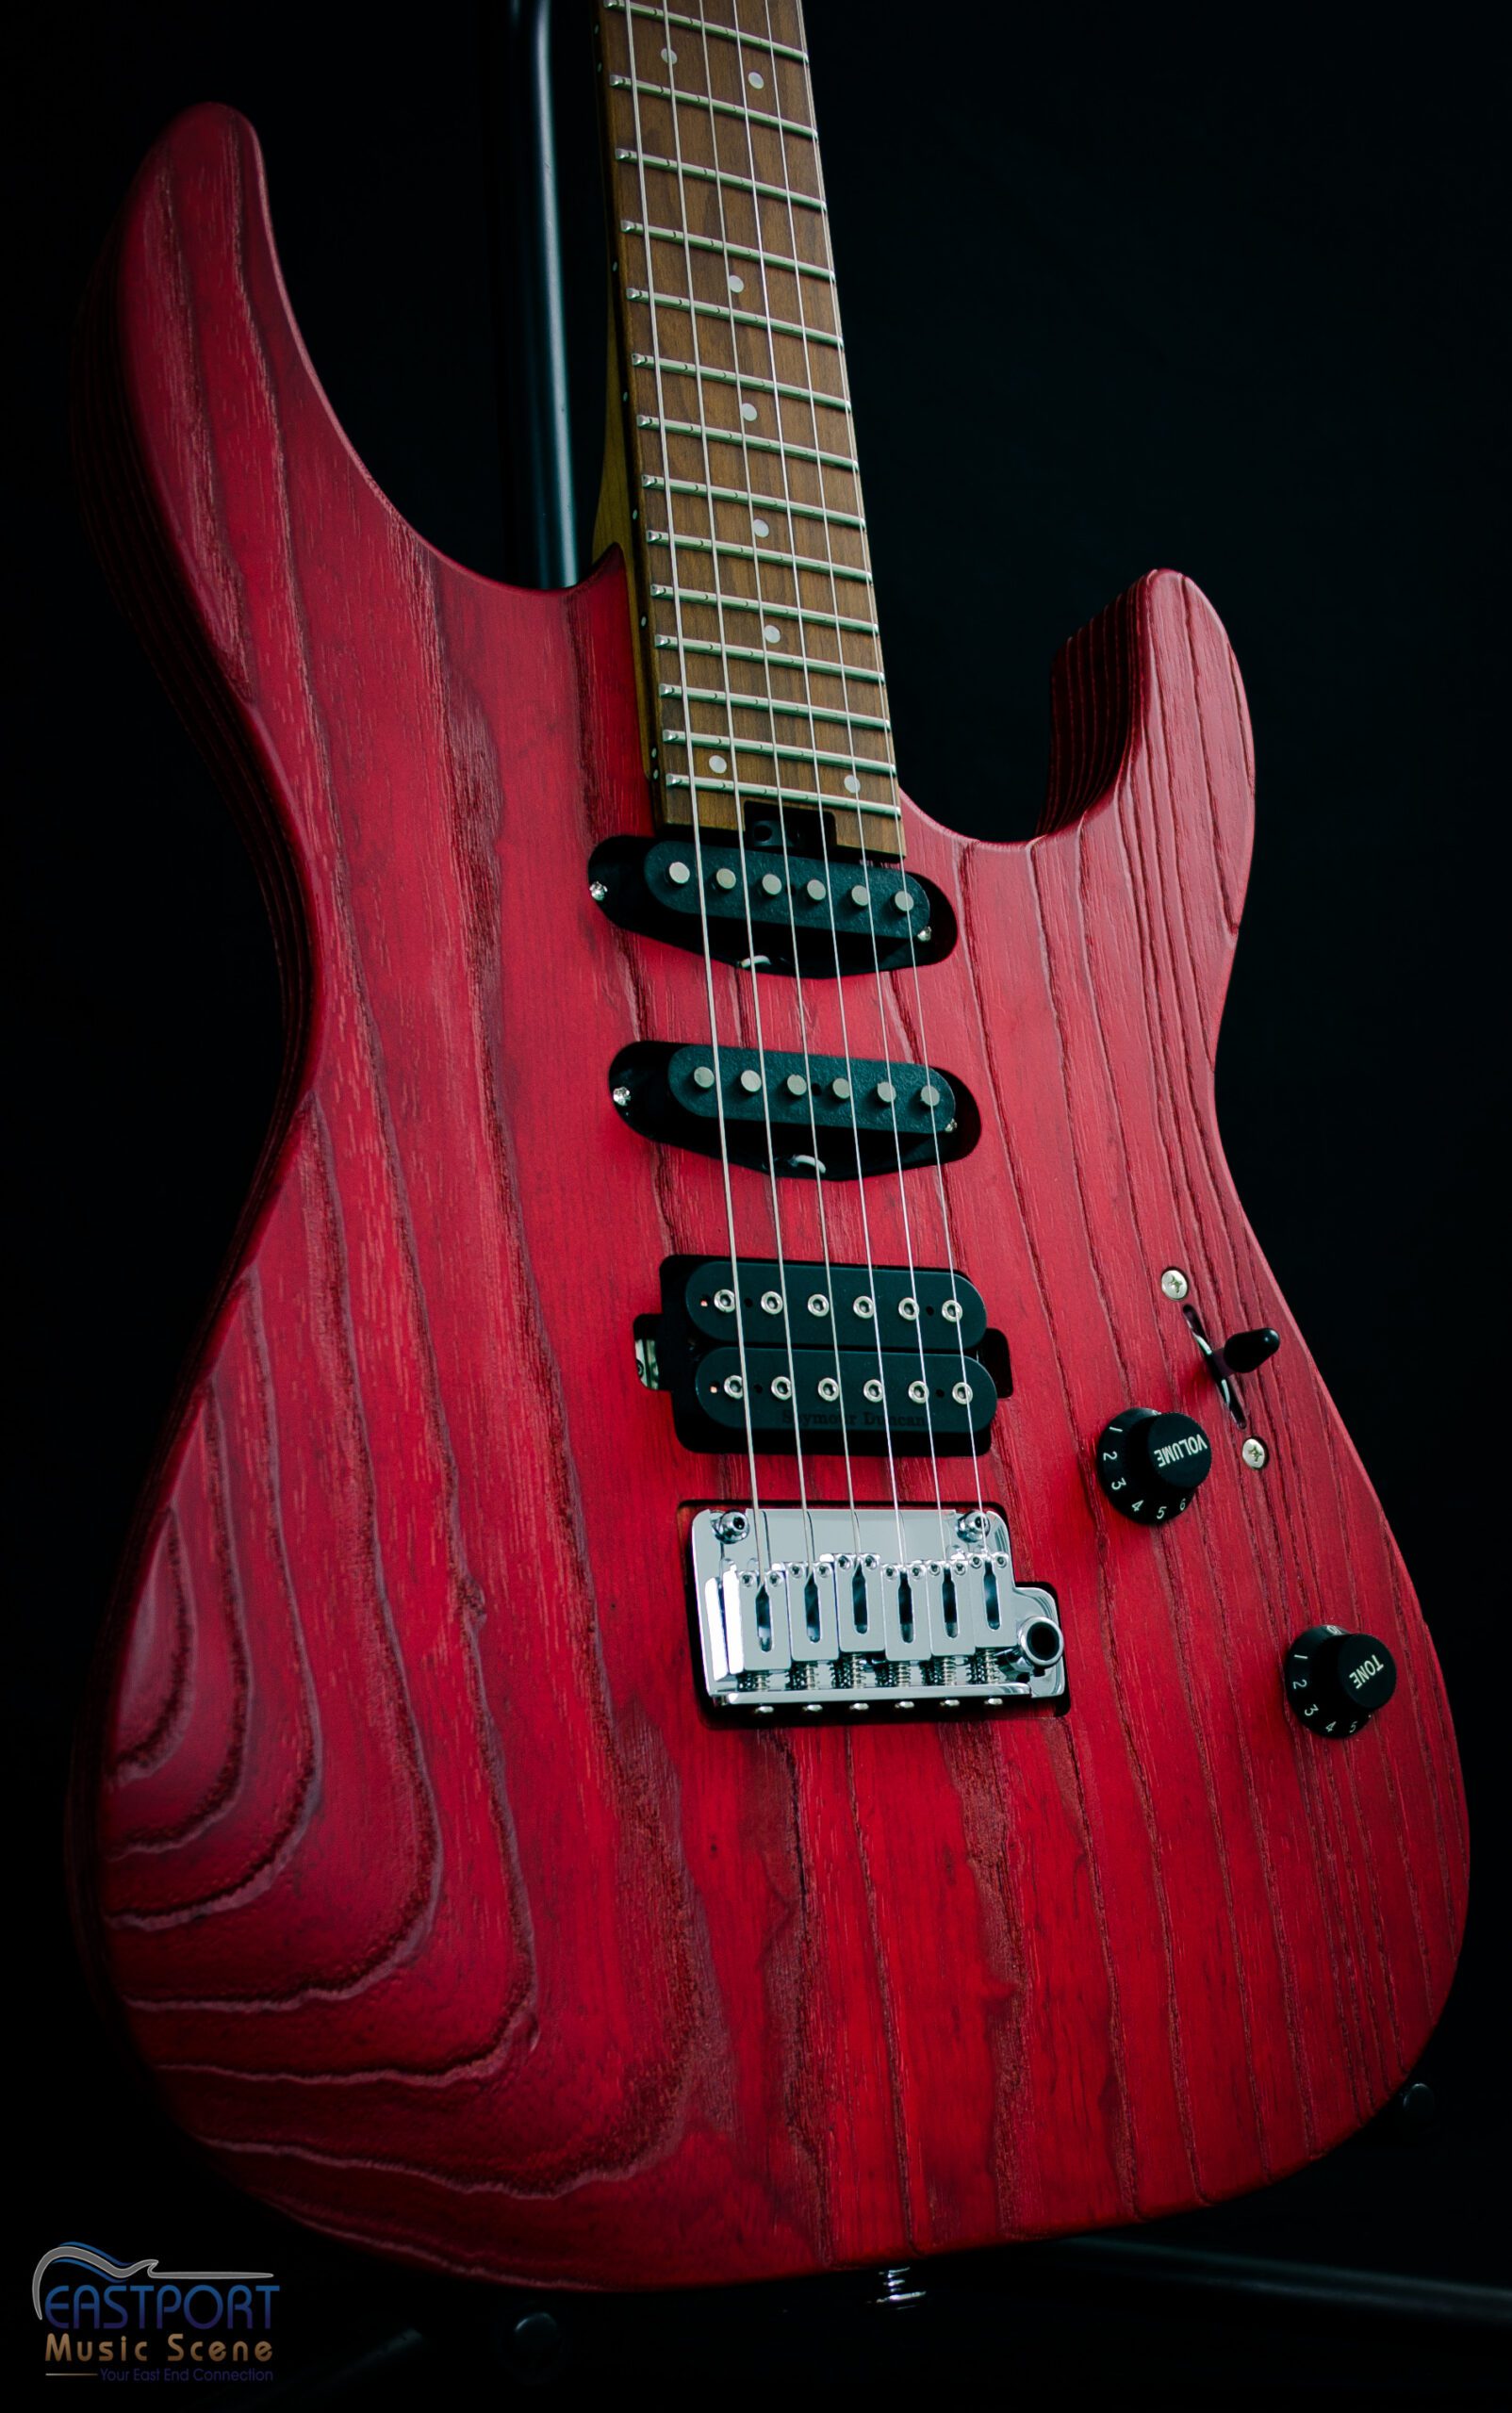 CHARVEL Pro-Mod dk24 Electric Guitar karamellisierter Ahorn Griffbrett Red Ash 